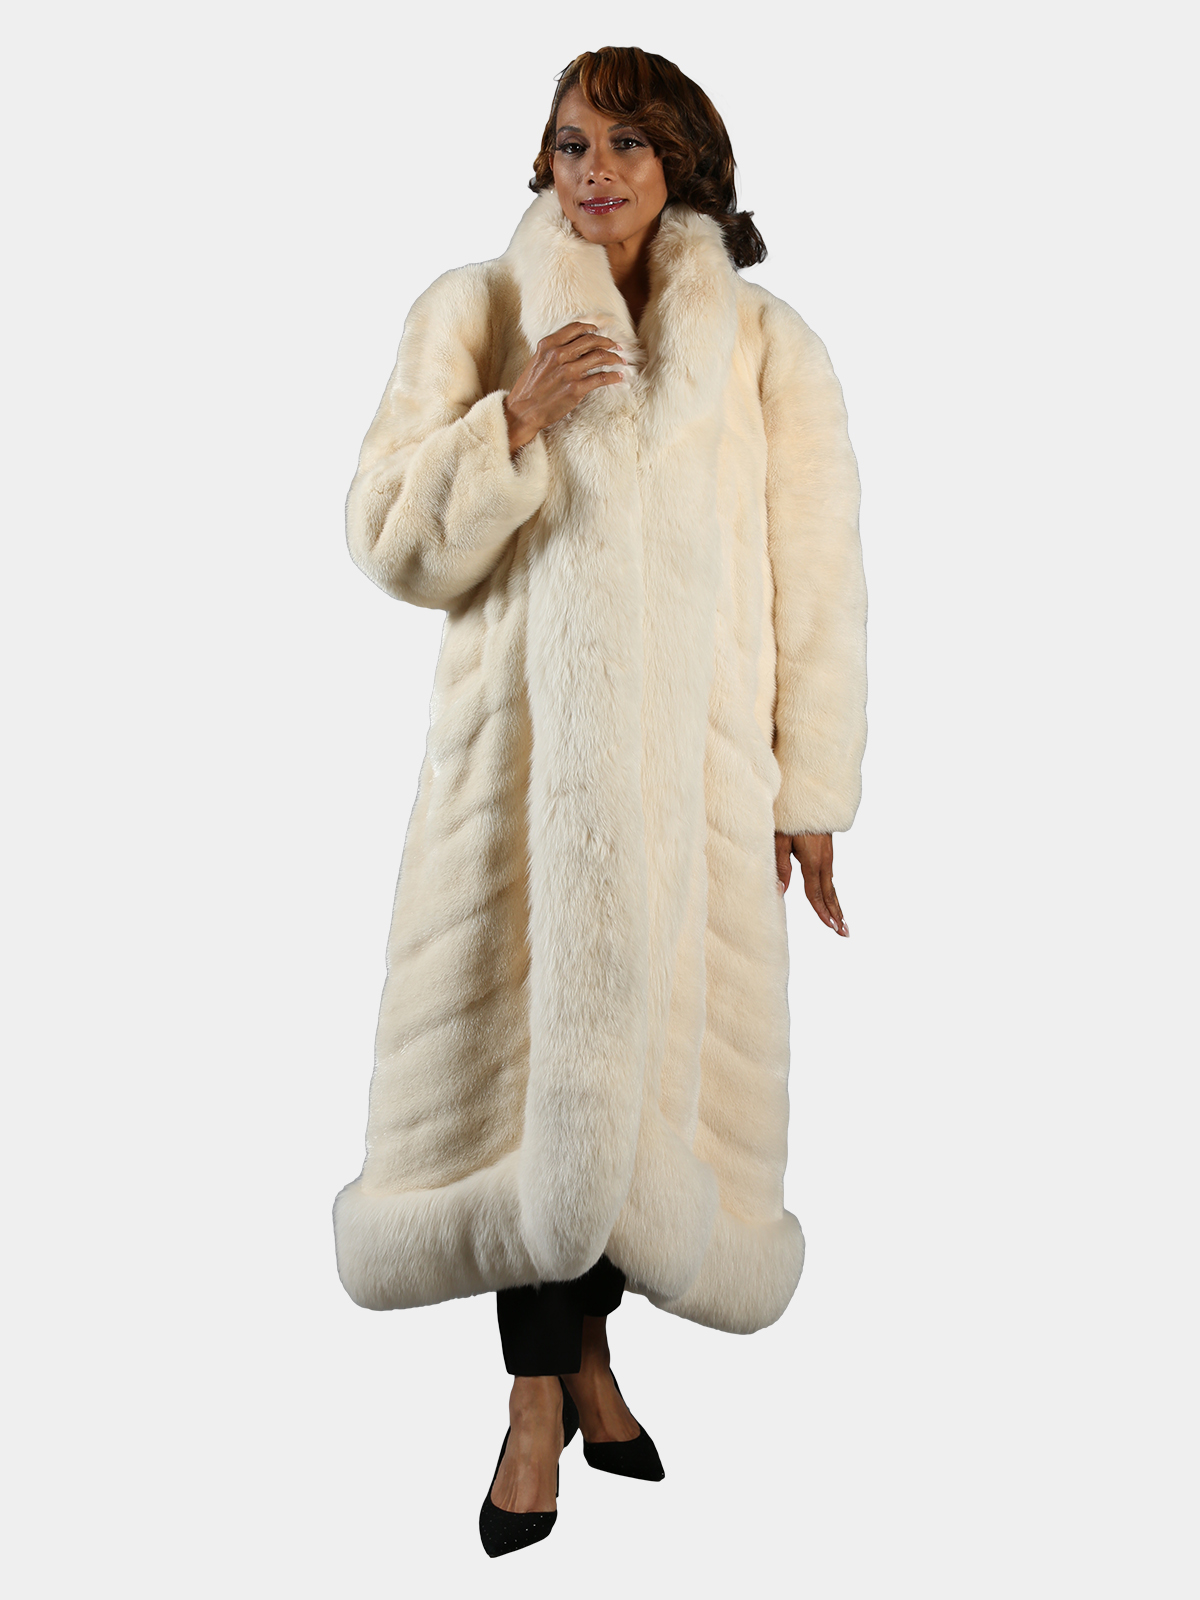 Christian Dior Off-White Mink Fur Coat with Fox Trim - Estate Furs